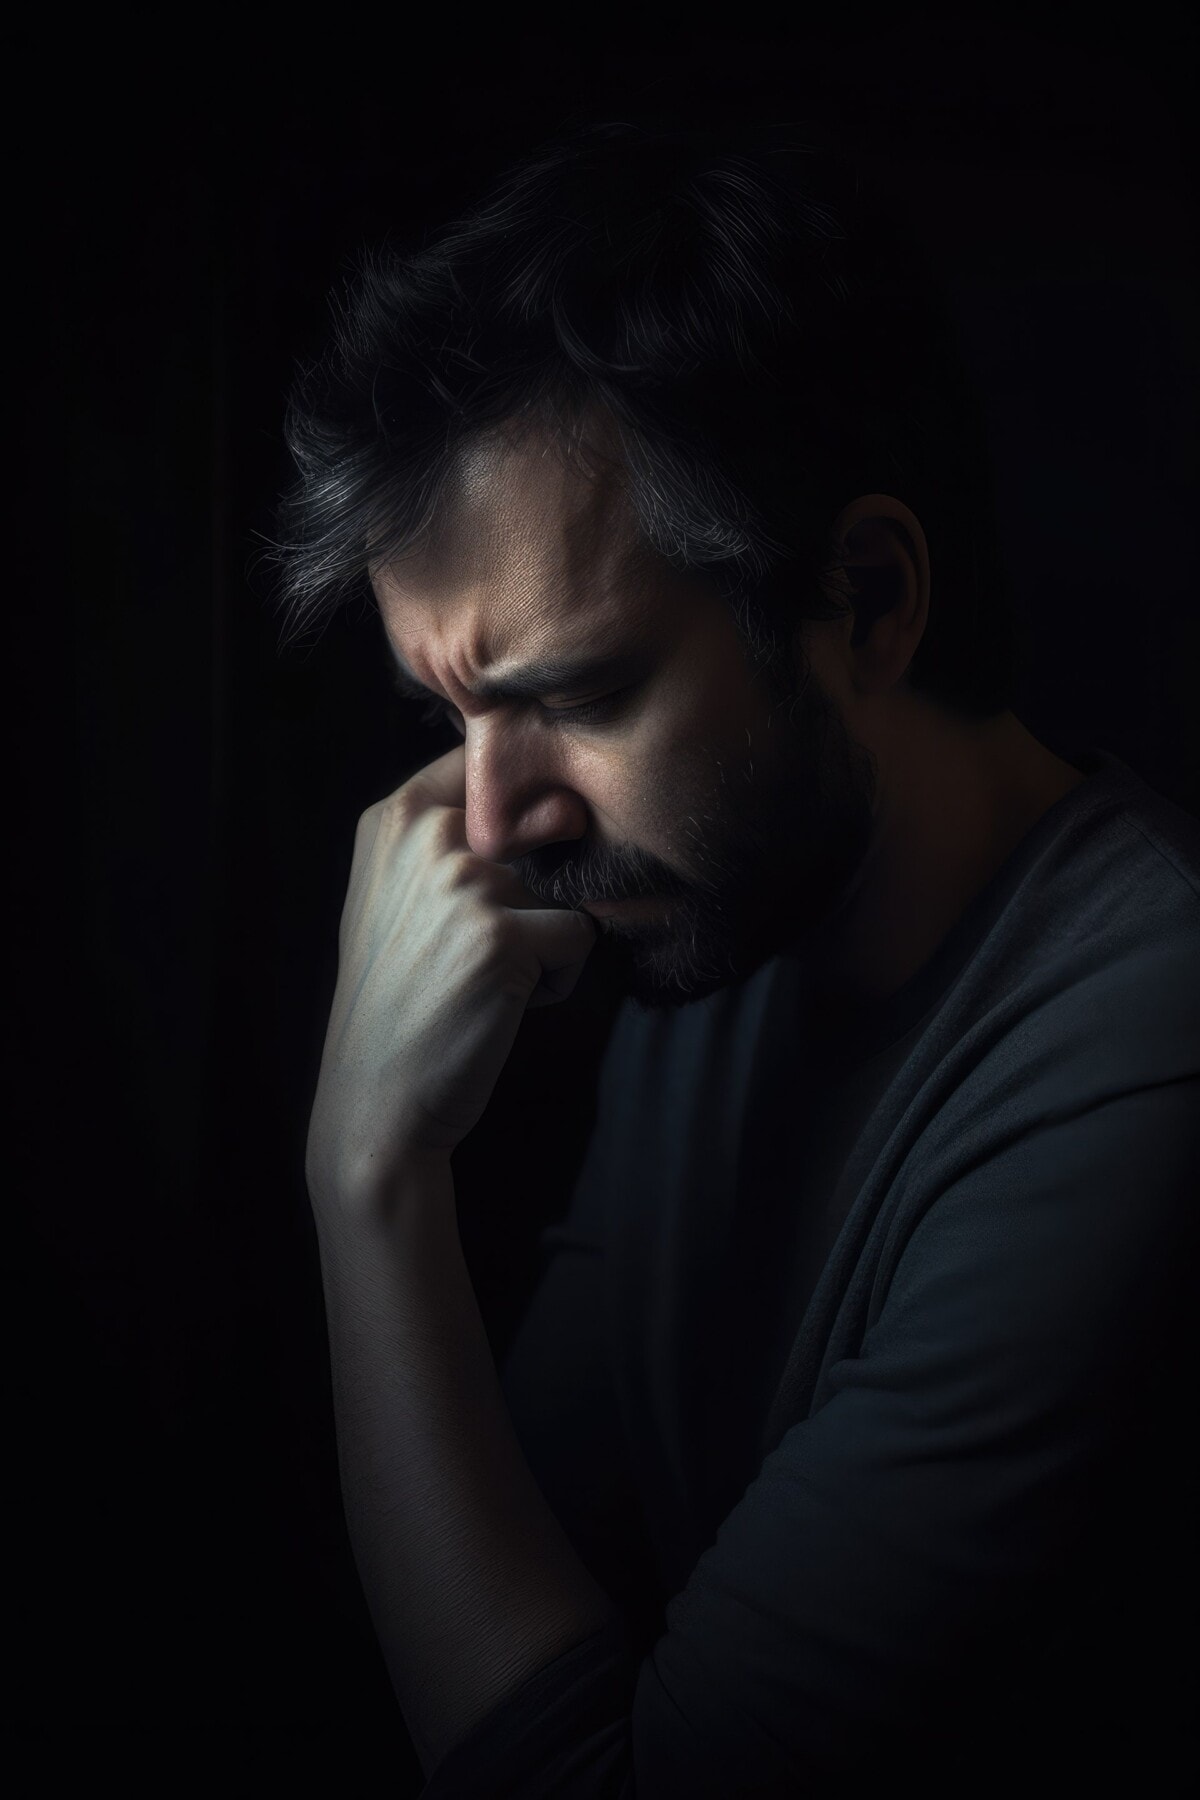 Sad isolated man in a dark room